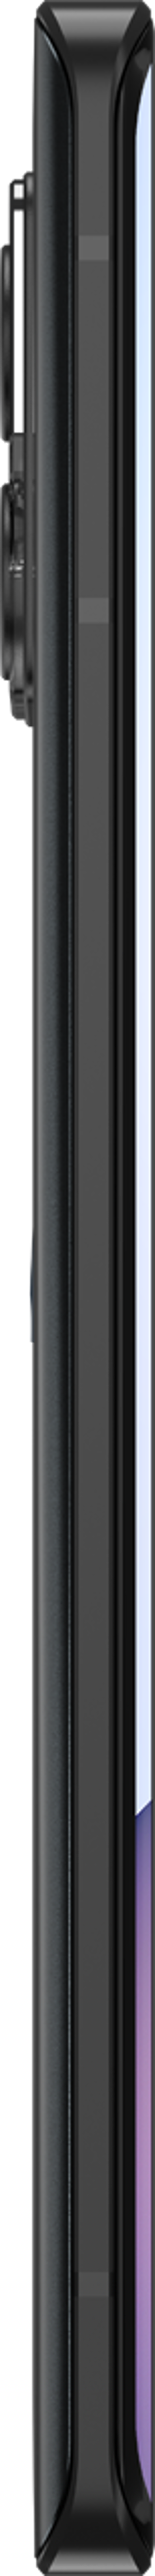 Motorola Edge 30 Fusion 128GB Kaksois-SIM Kosminen harmaa